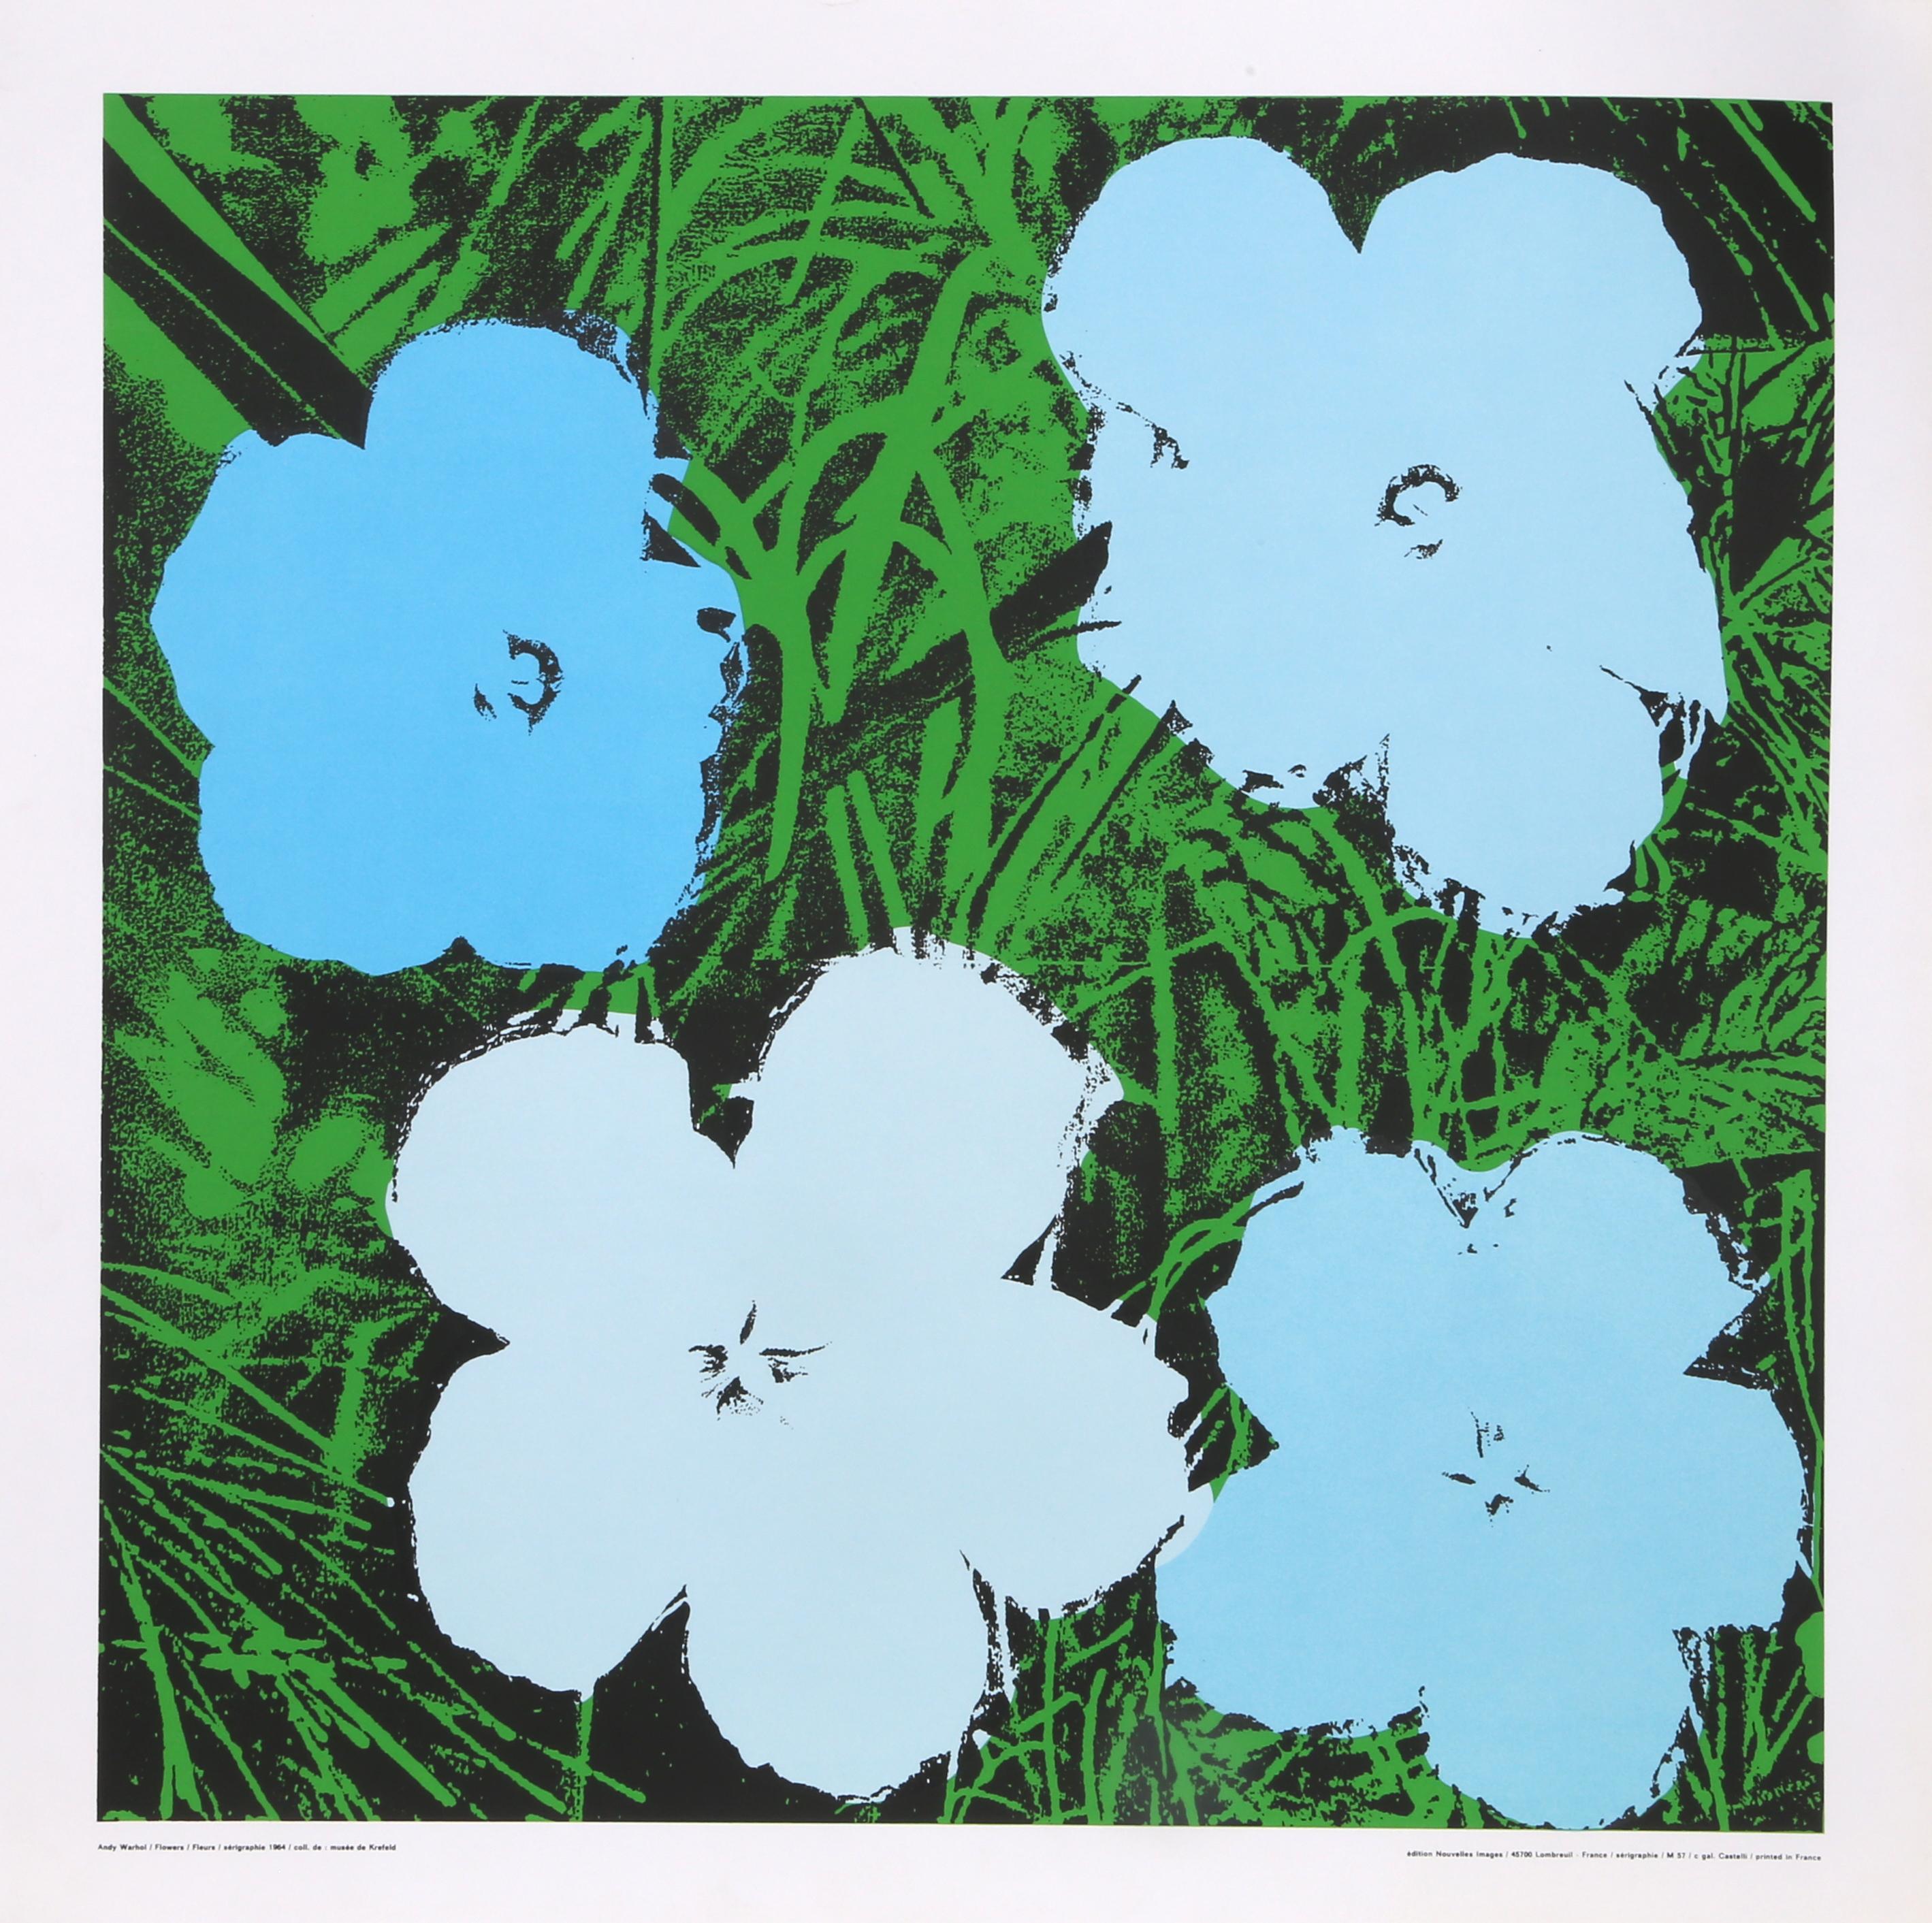 Flowers 1964, Pop Art Screenprint by Andy Warhol For Sale 2